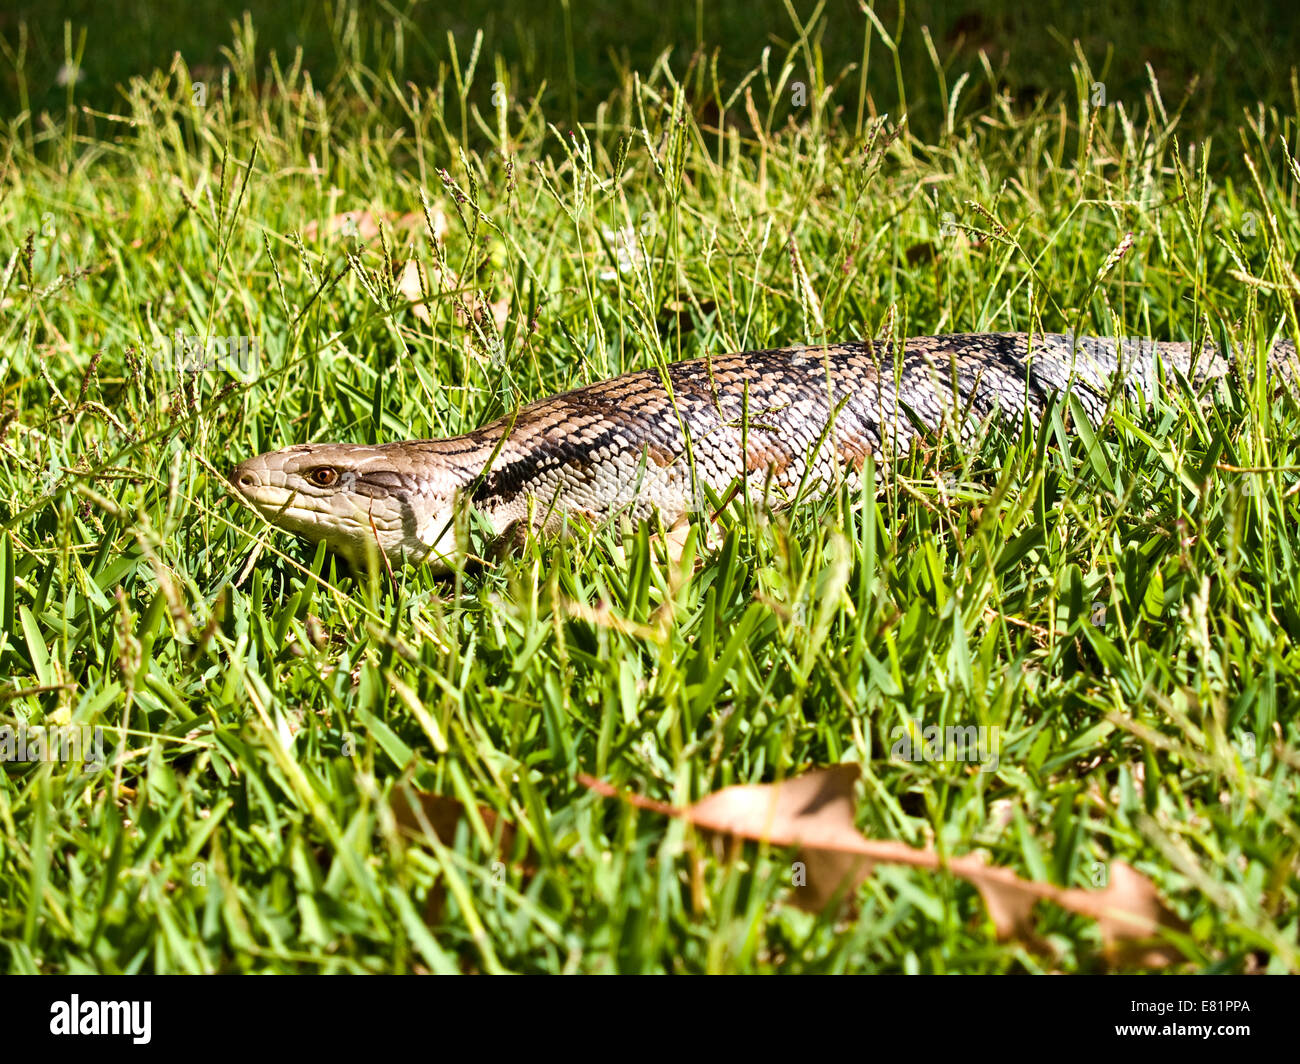 Australia: Blue Tongue Lizard (Tiliqua scincoides) Stock Photo